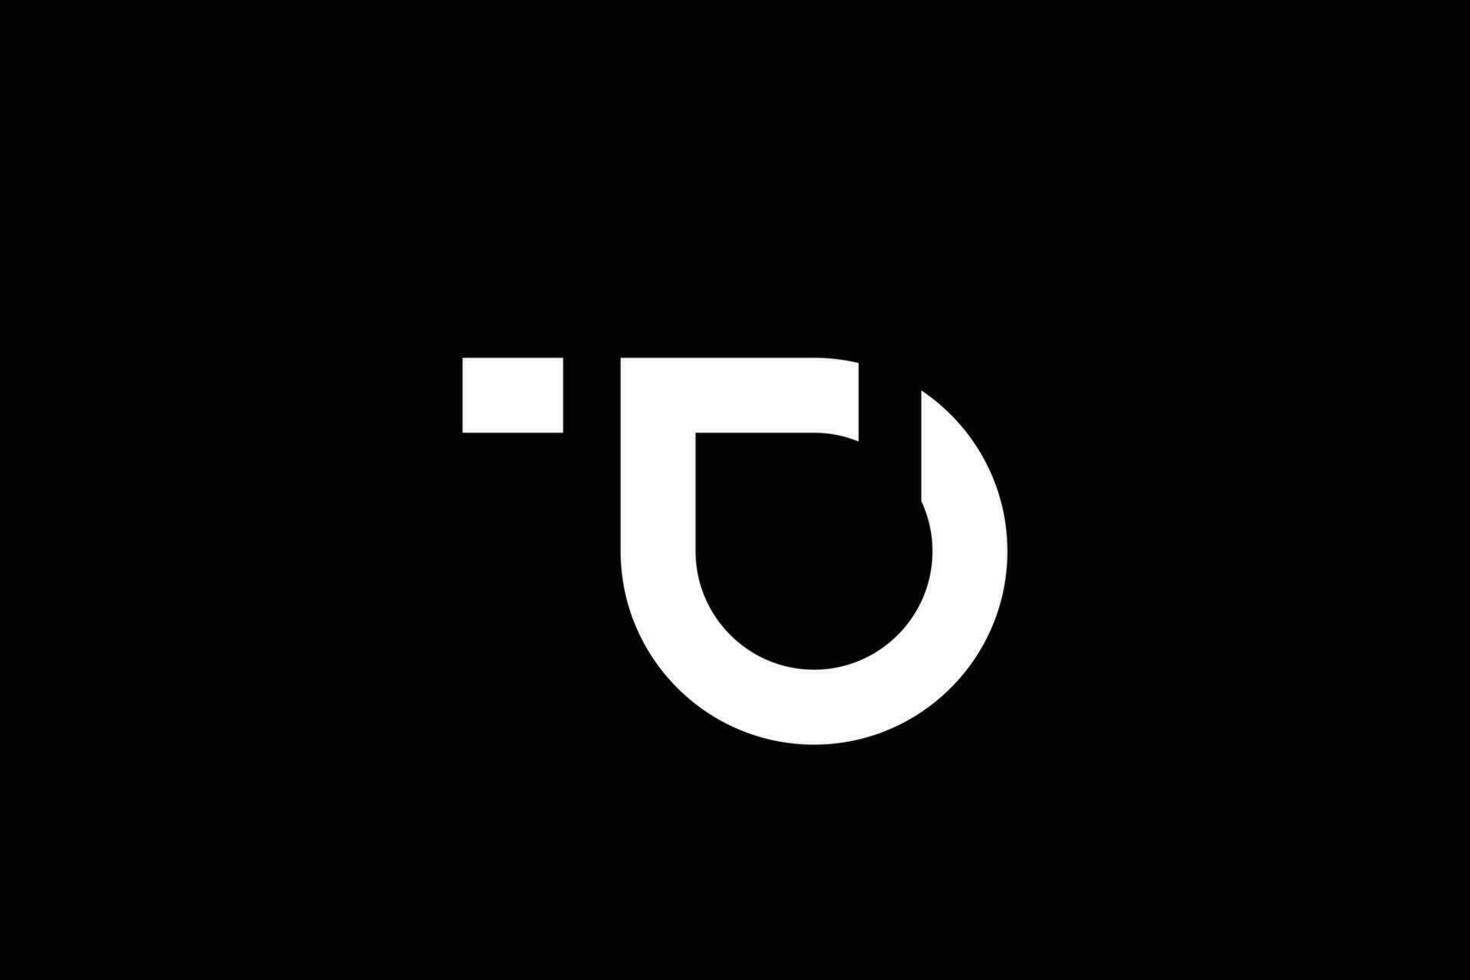 Buchstabe t-Logo-Design-Vorlage vektor